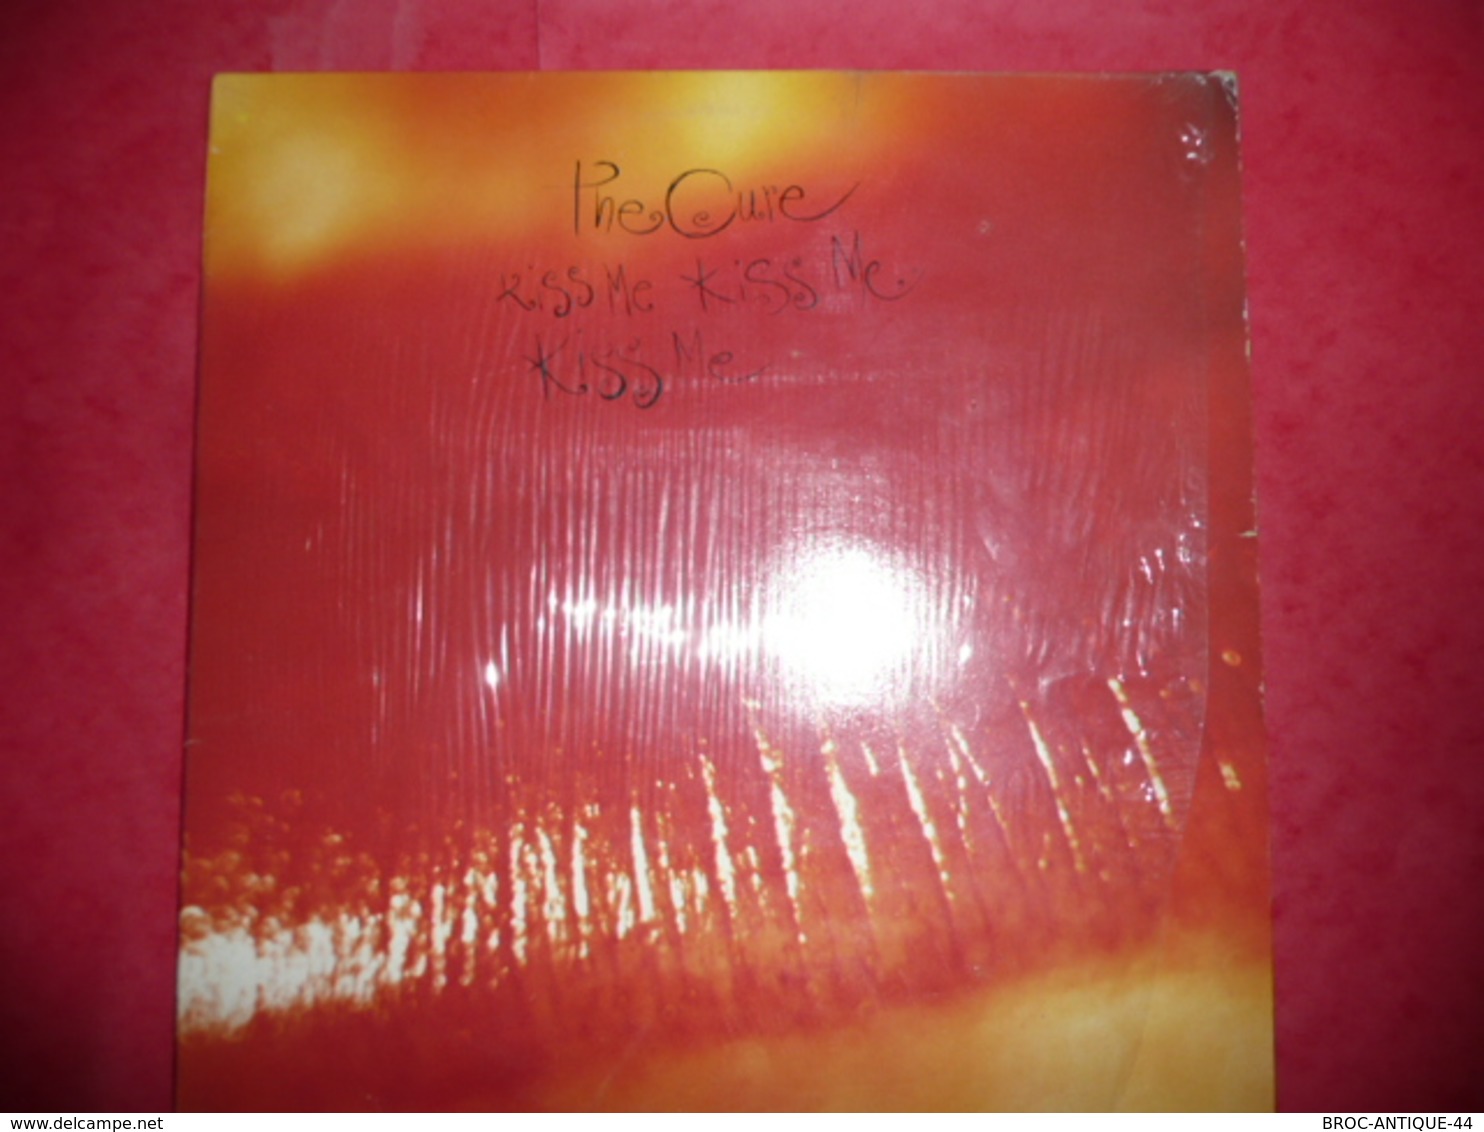 LP N°1595 - THE CURE - KISS ME KISS ME KISS ME - 2 LP COMPILATION 18 TITRES ROCK PSYCHEDELIC POP NEW WAVE - Rock